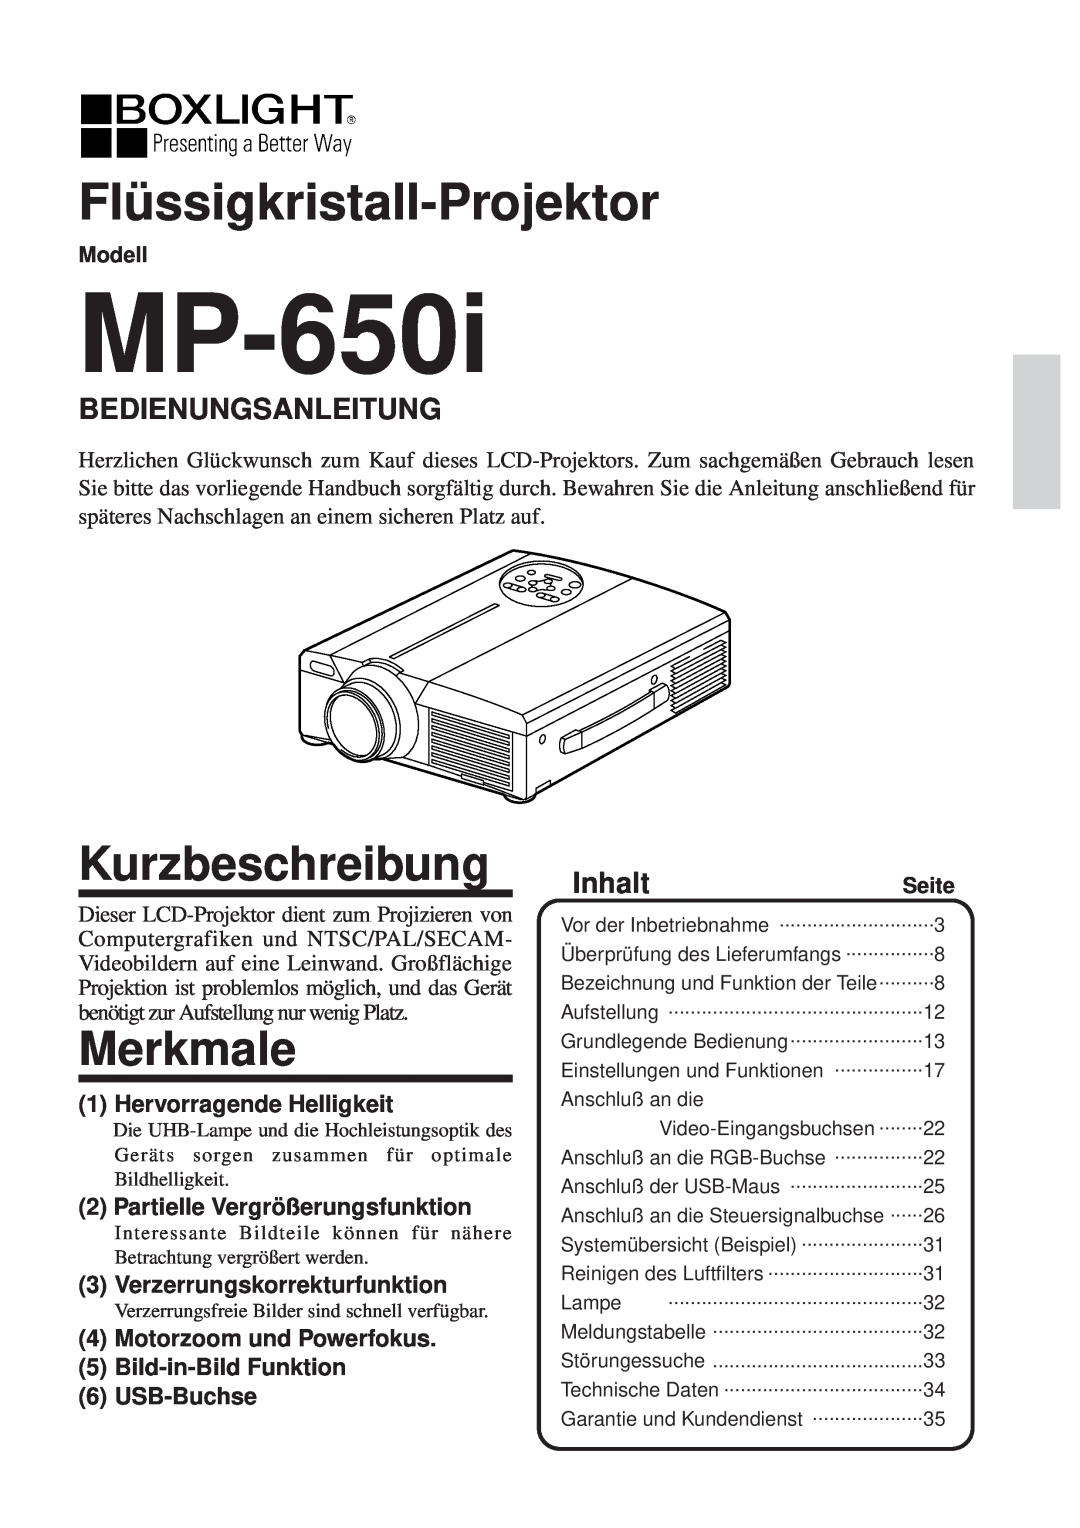 BOXLIGHT MP-650i Flüssigkristall-Projektor, Kurzbeschreibung, Merkmale, Bedienungsanleitung, Inhalt, Modell, Seite 